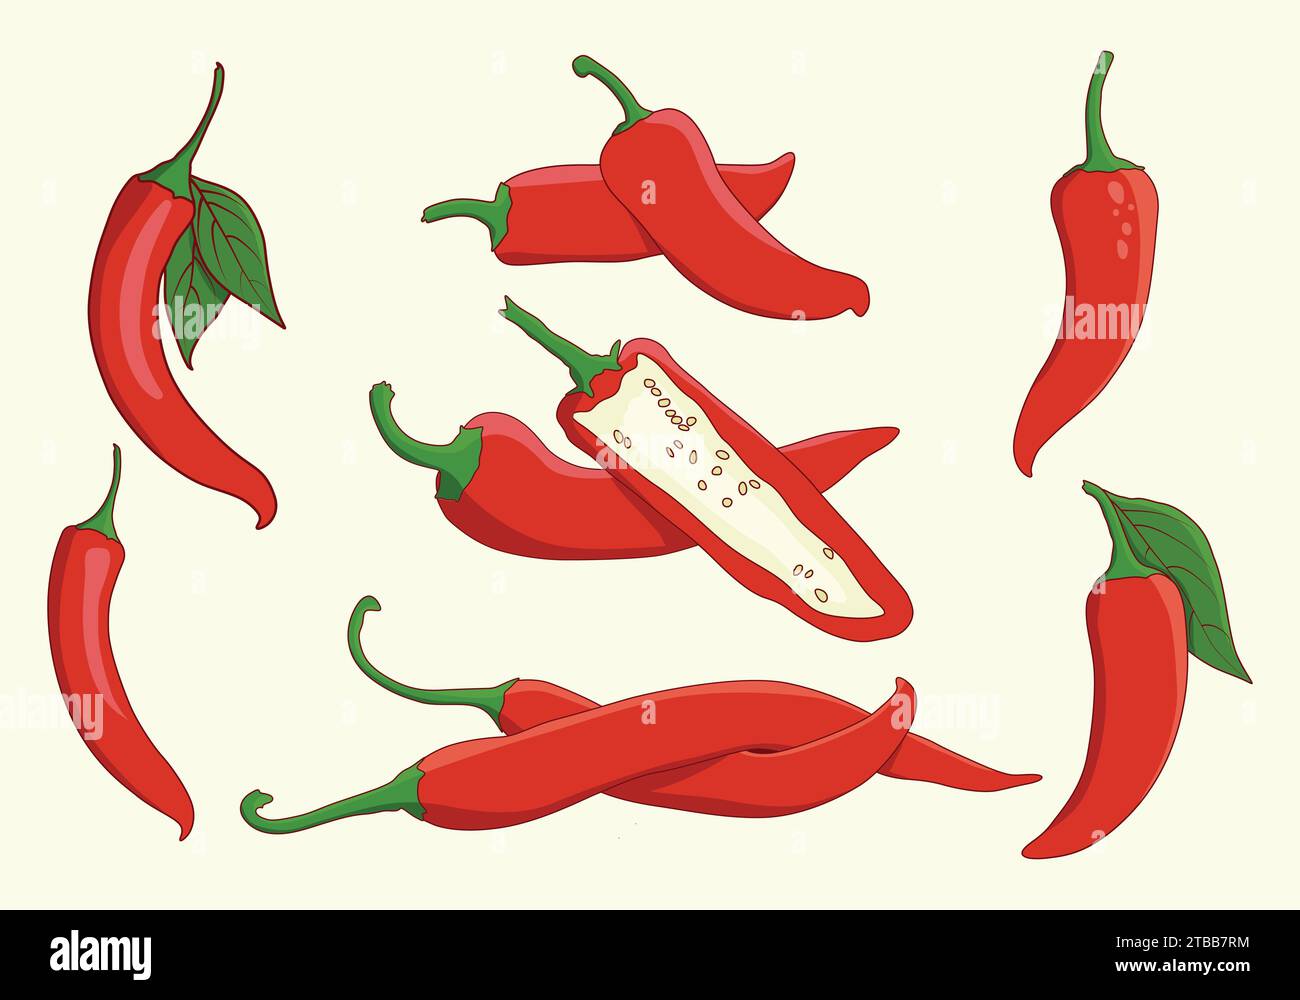 Chili pepper vector illustration, Chili illustration, Chili pepper logo set, Chili pepper vector, Chili icon, Hot chili illustration. Stock Vector